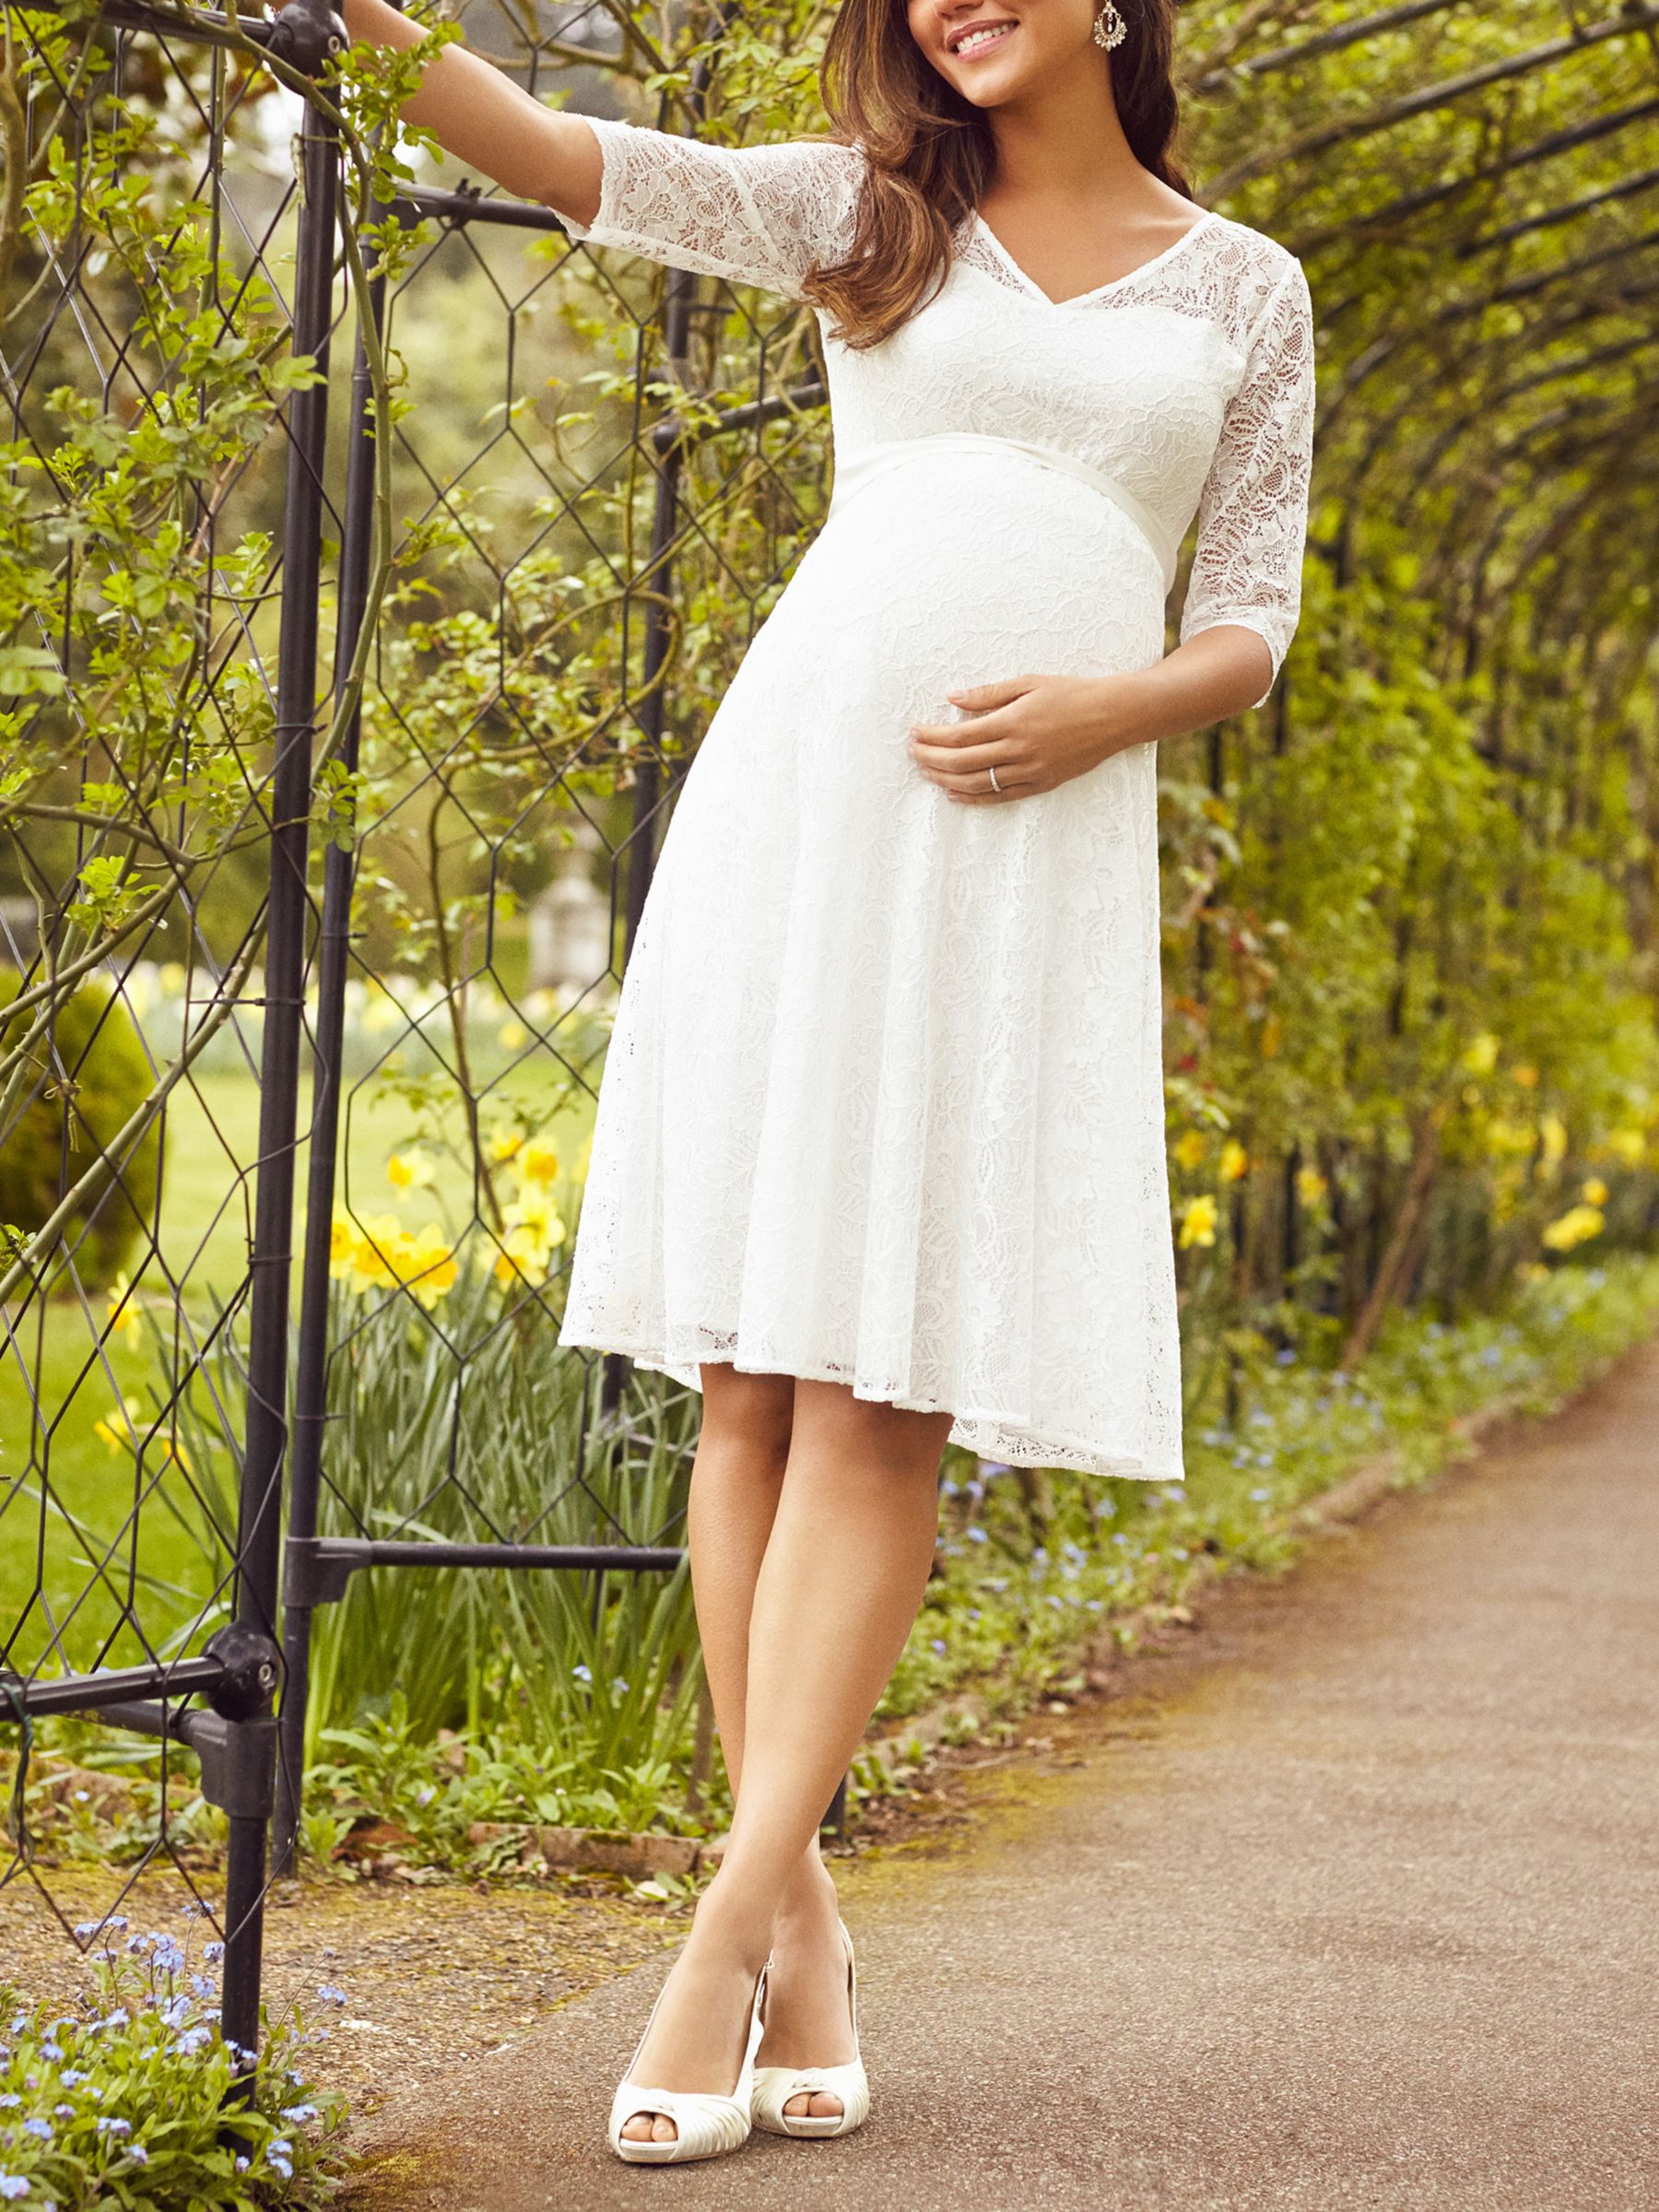 Tiffany Rose Flossie Maternity Lace Short Wedding Dress, Ivory, 6-8